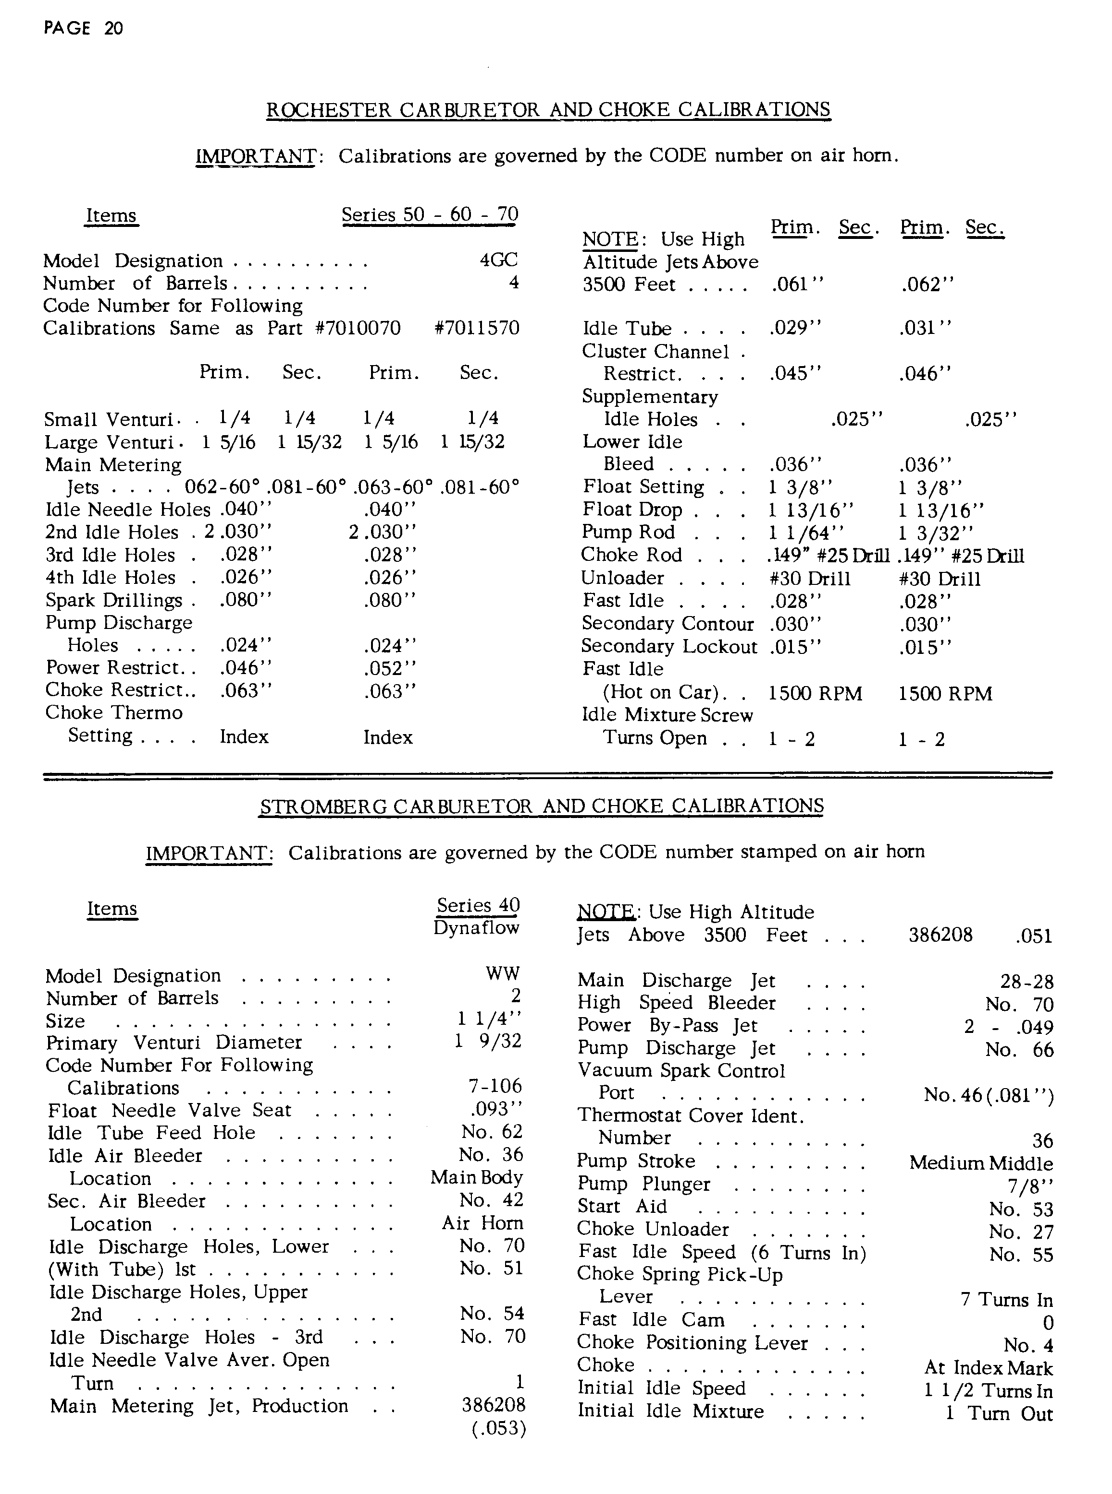 n_1957 Buick Product Service  Bulletins-026-026.jpg